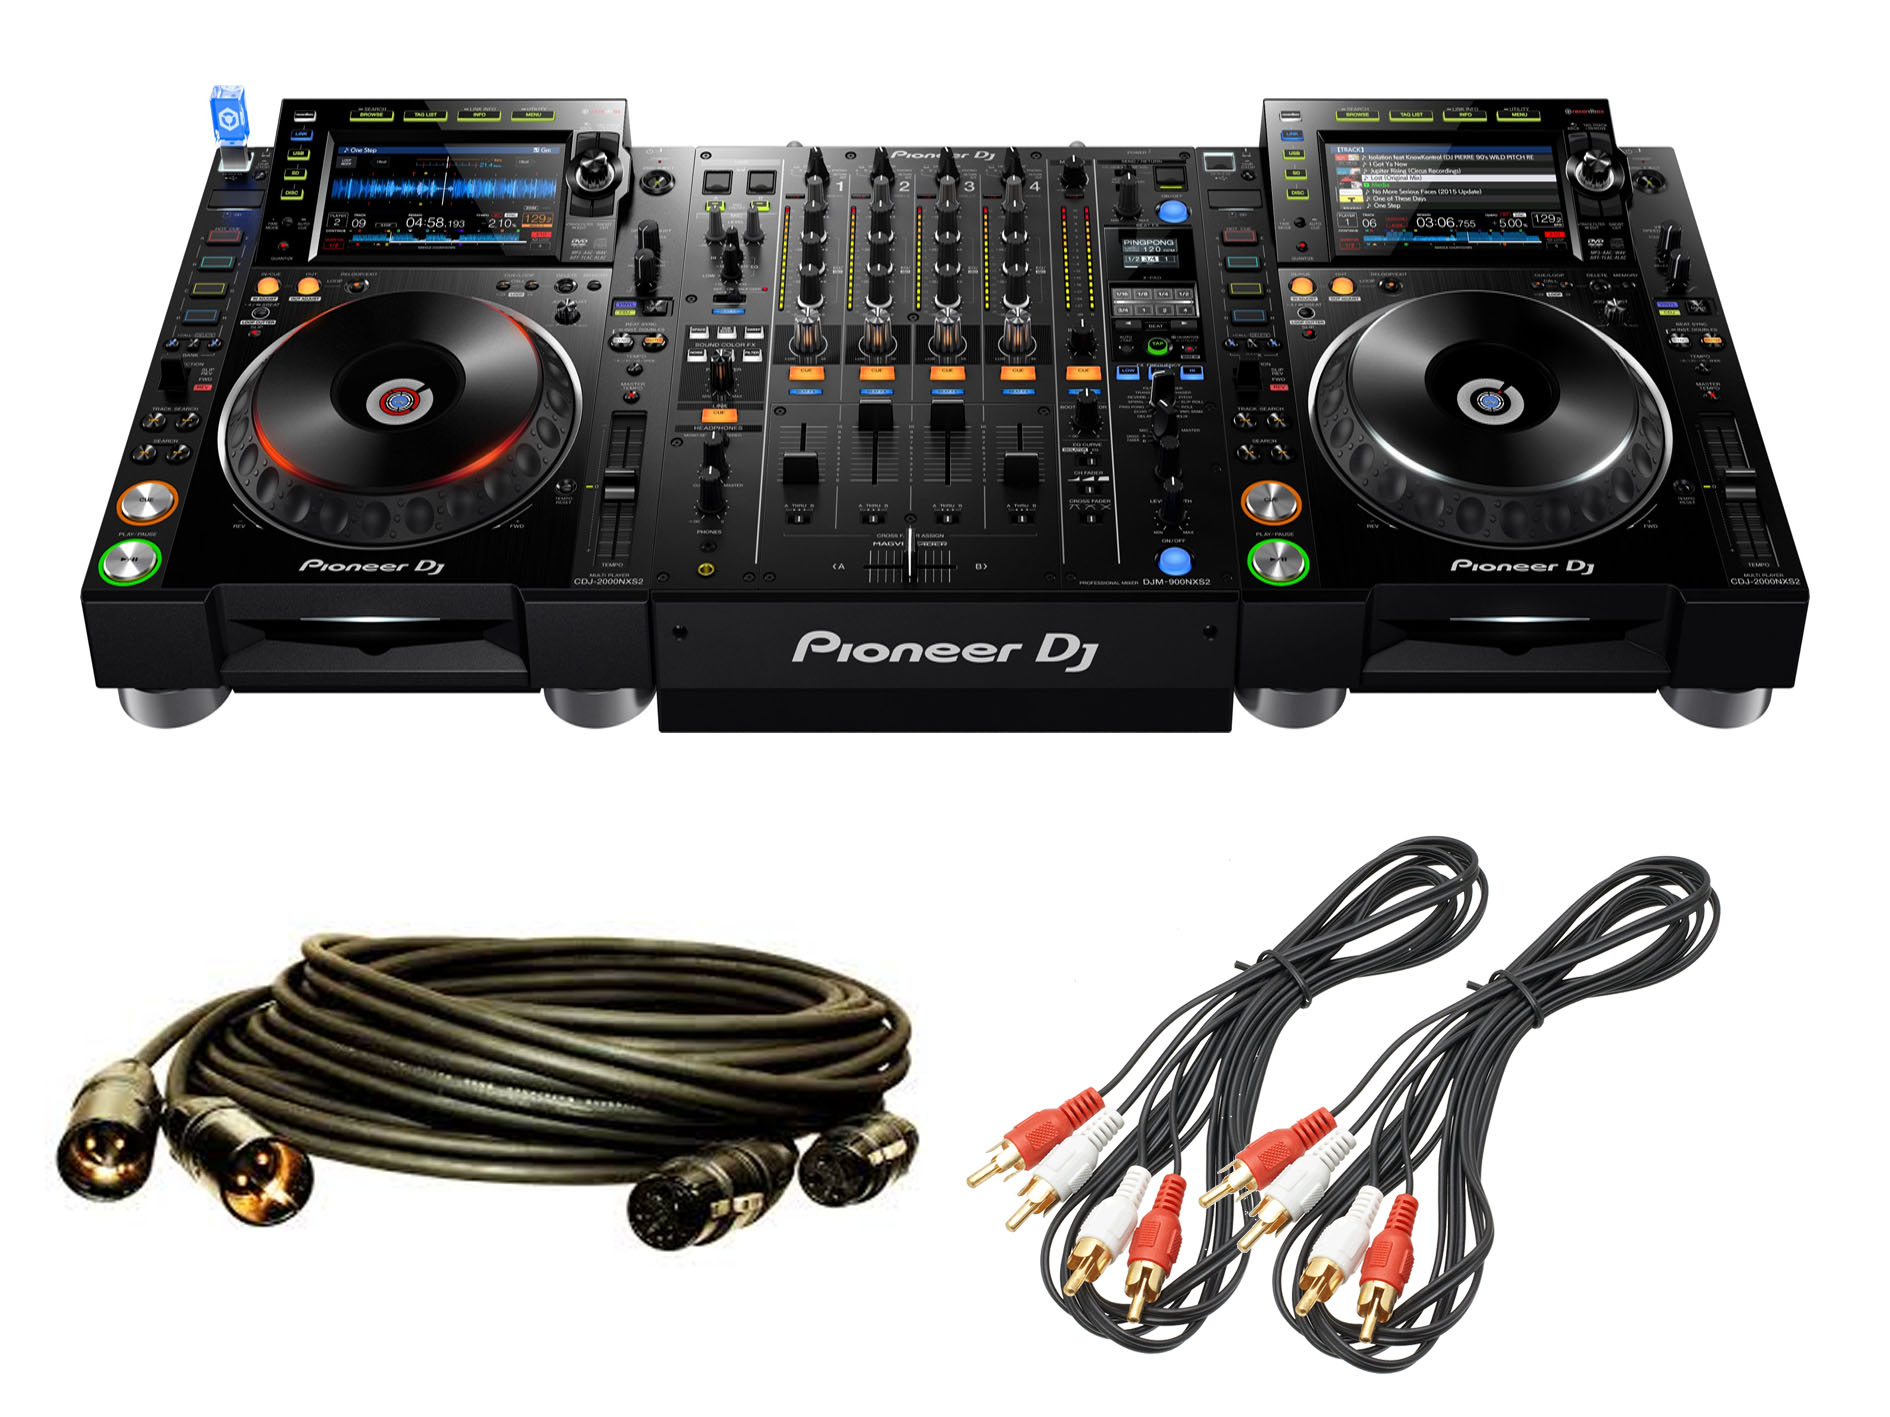 We have Pioneer CDJ 800 MK2 + DJM 700 Mixer and CDJ NXS2 2000 Nexus + DJM 900 NXS2 Mixer for Hire